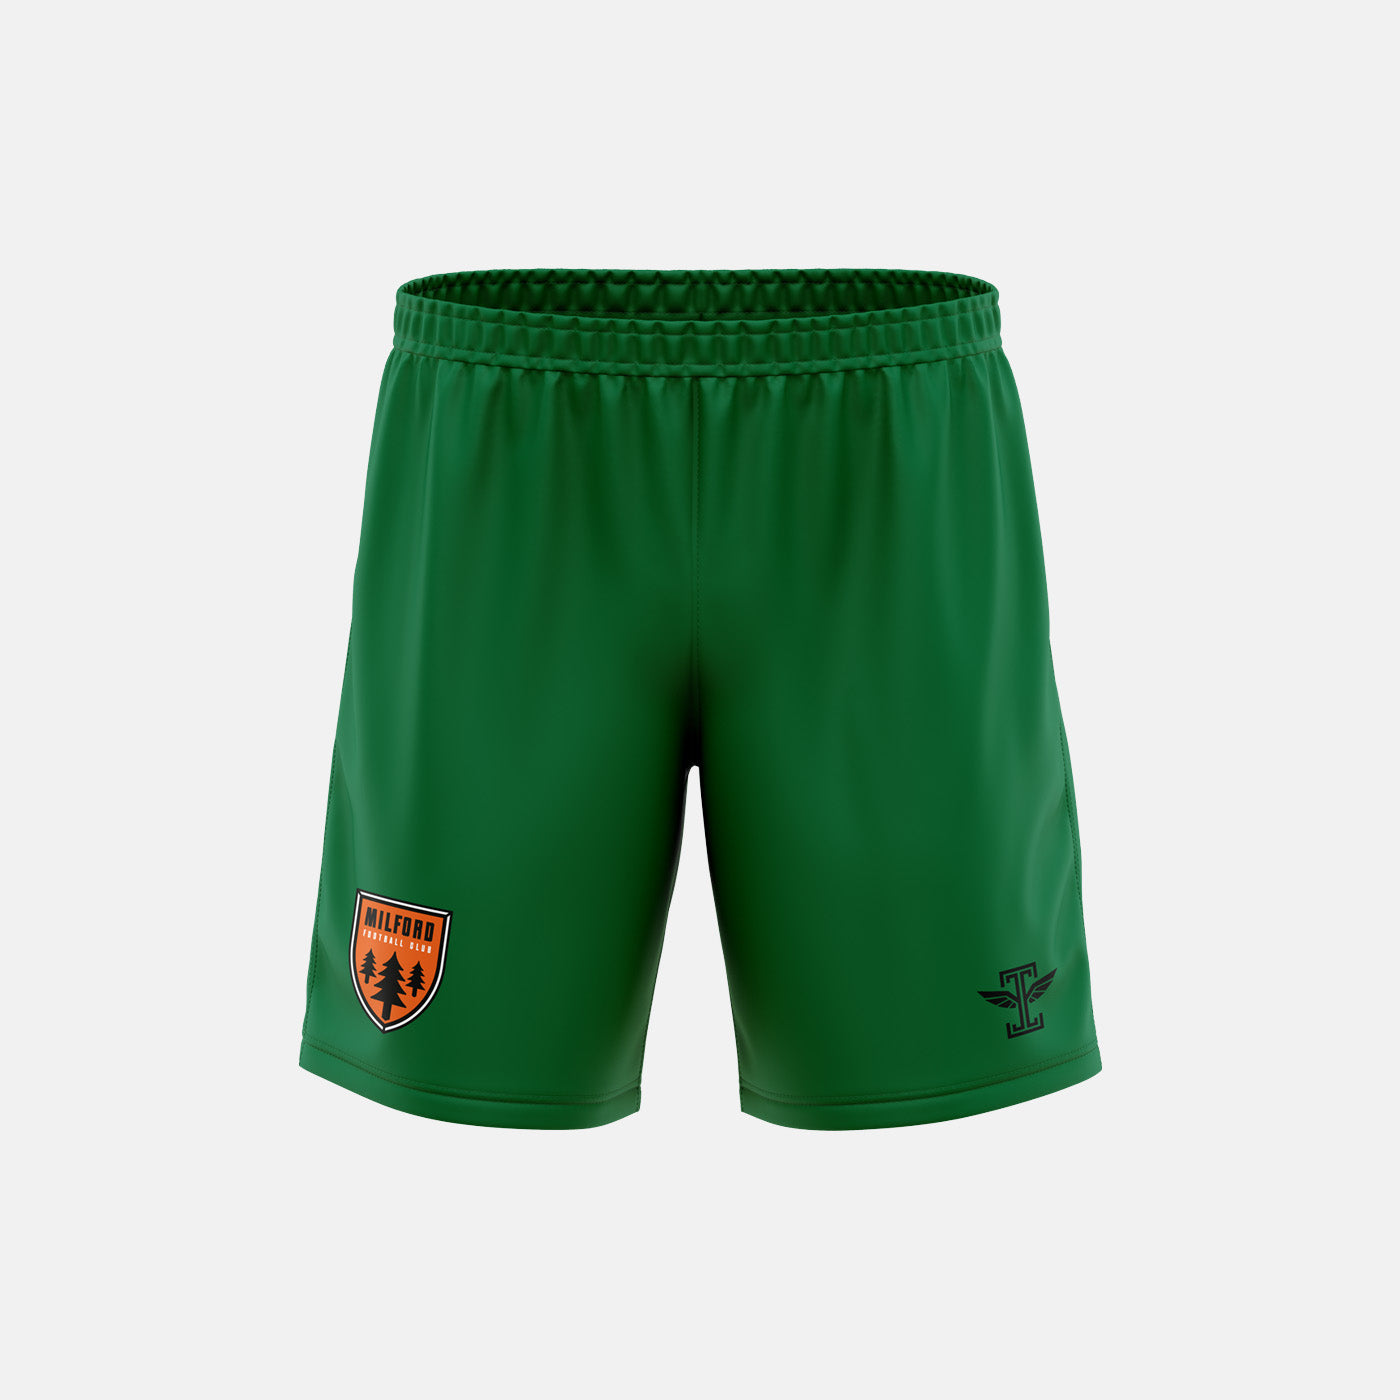 Milford FC Green Shorts